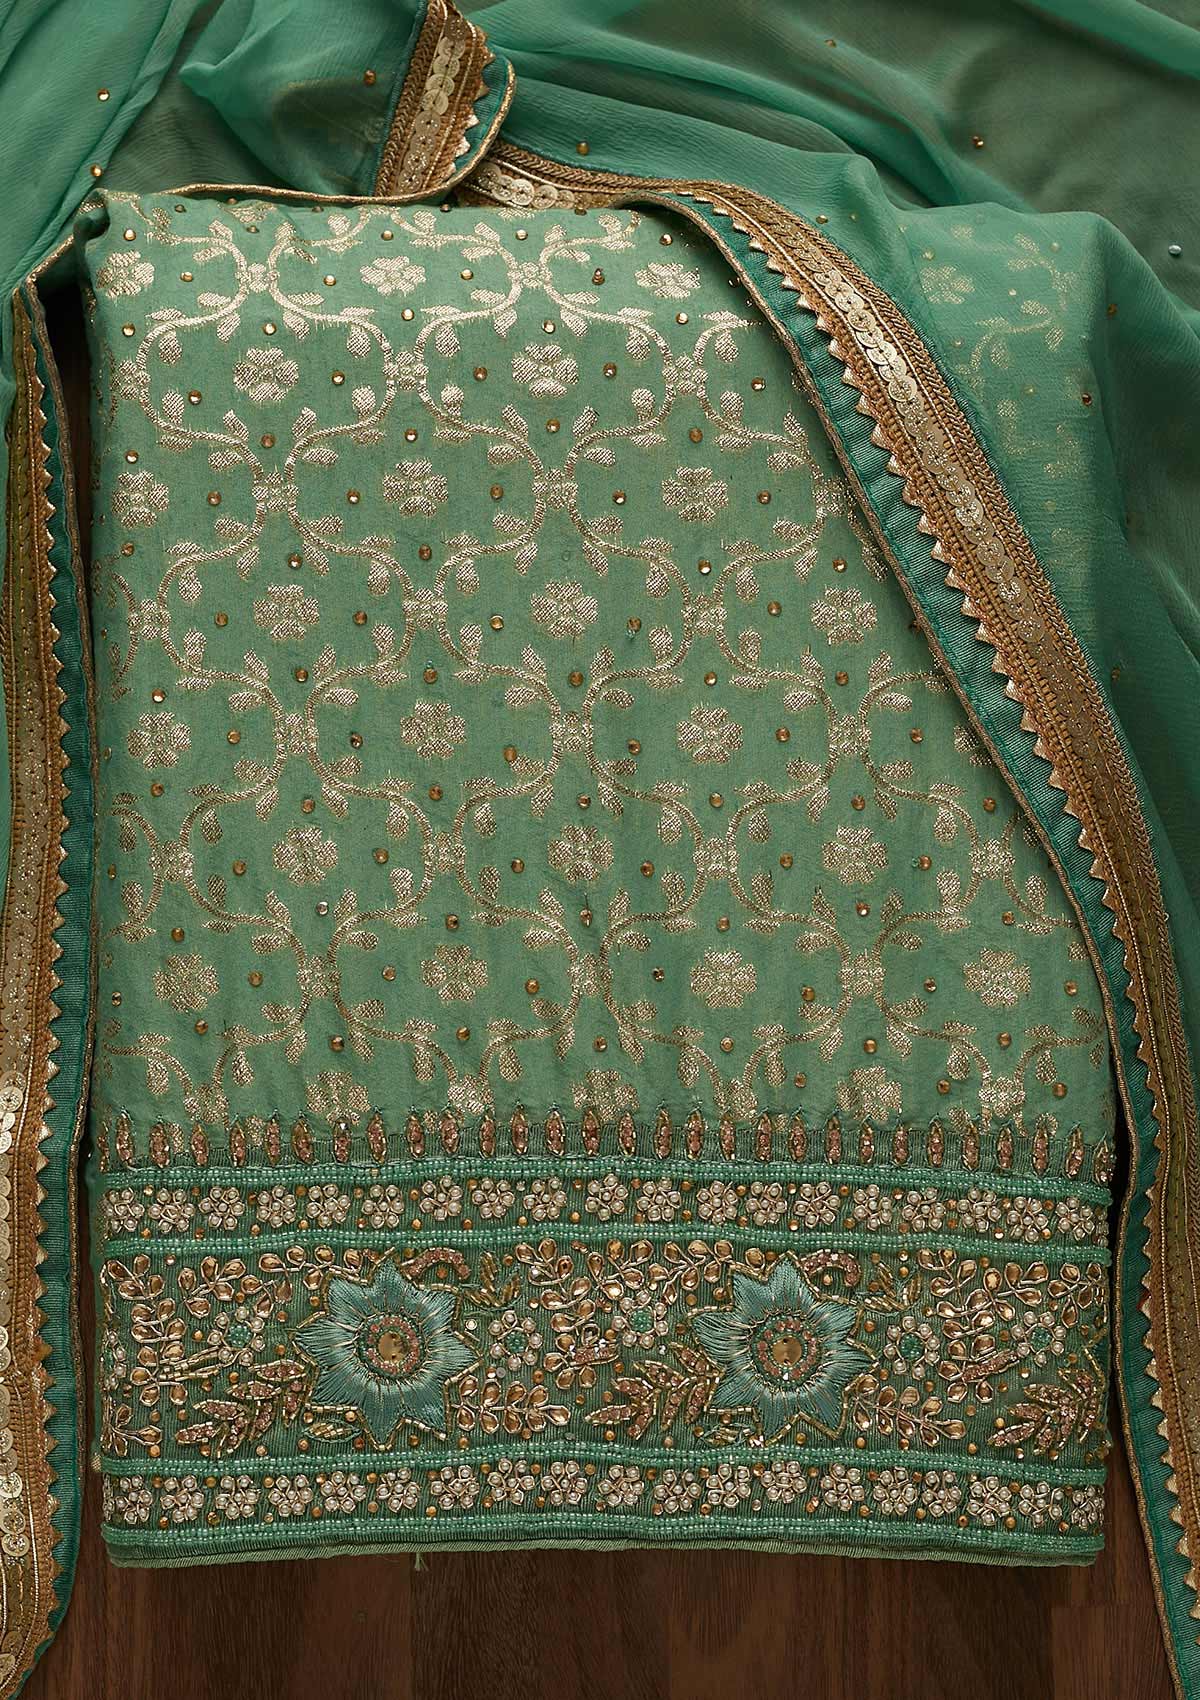 Sea Green Pearlwork Raw Silk Unstitched Salwar Suit-Koskii